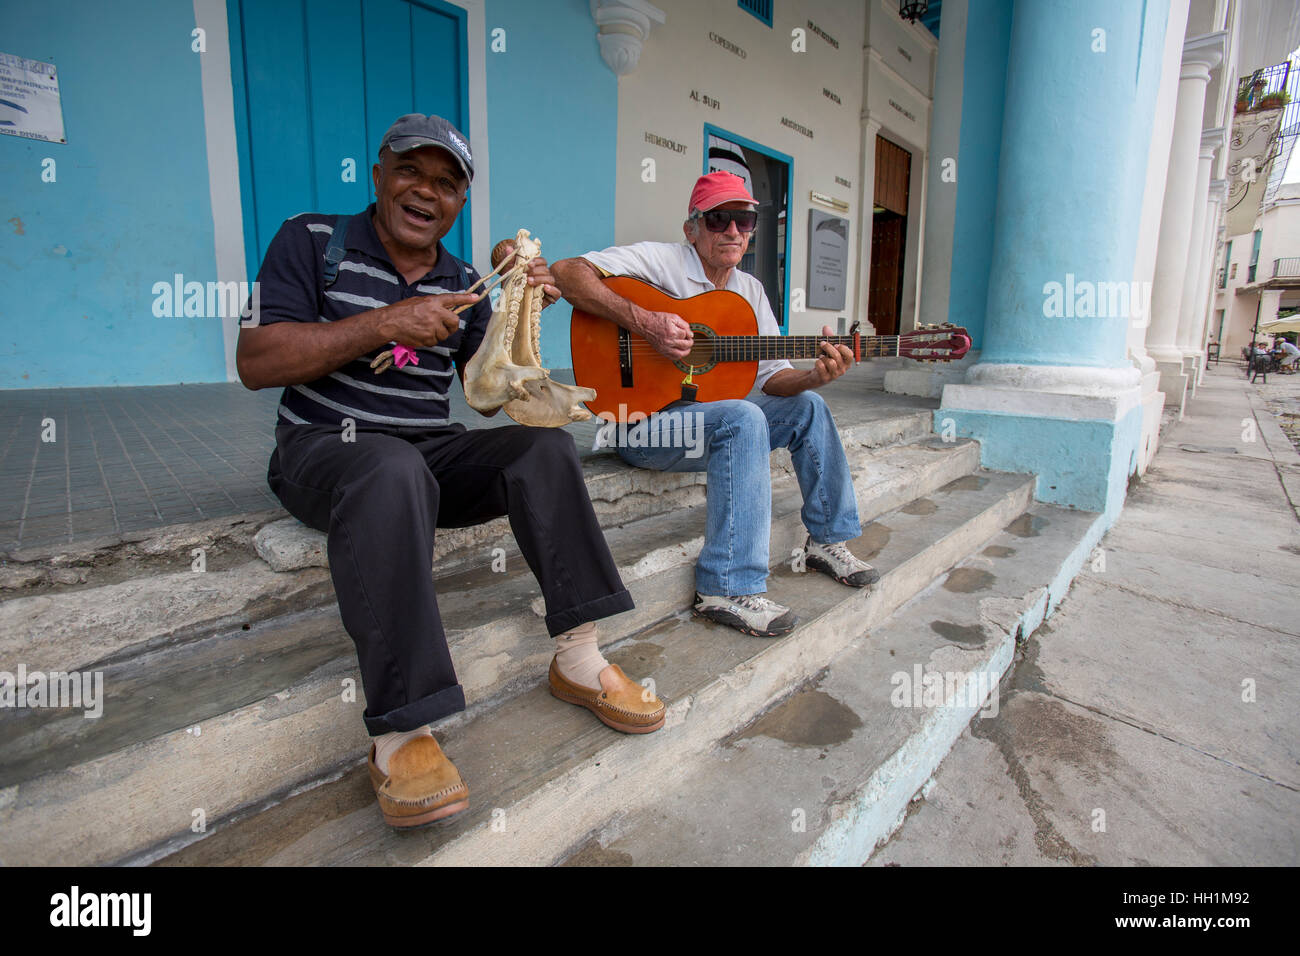 Musicians at Plaza Vieja in Old Havana Stock Photo